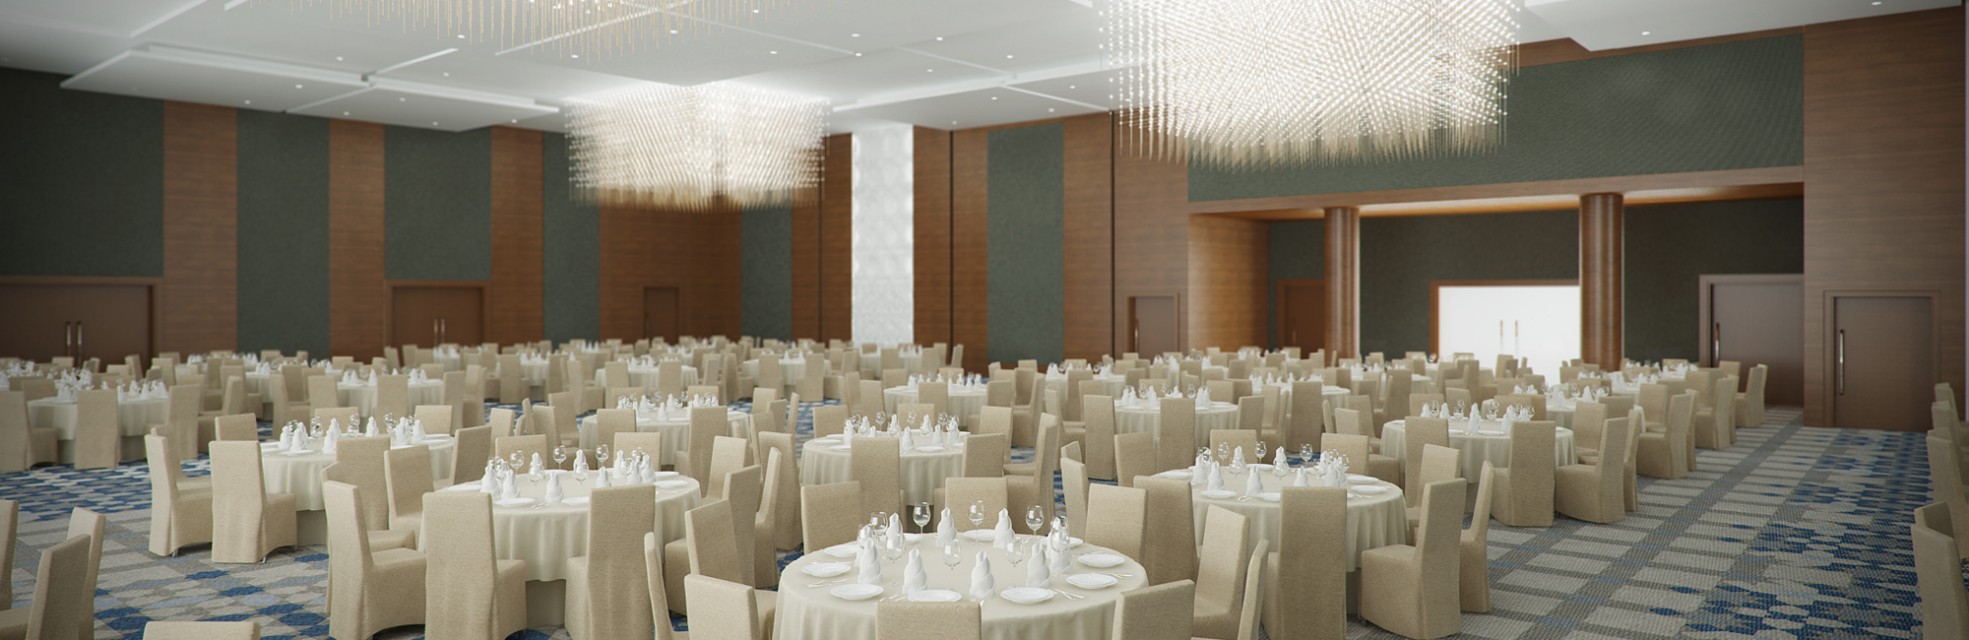 Banqueting hall - Algery Hotel